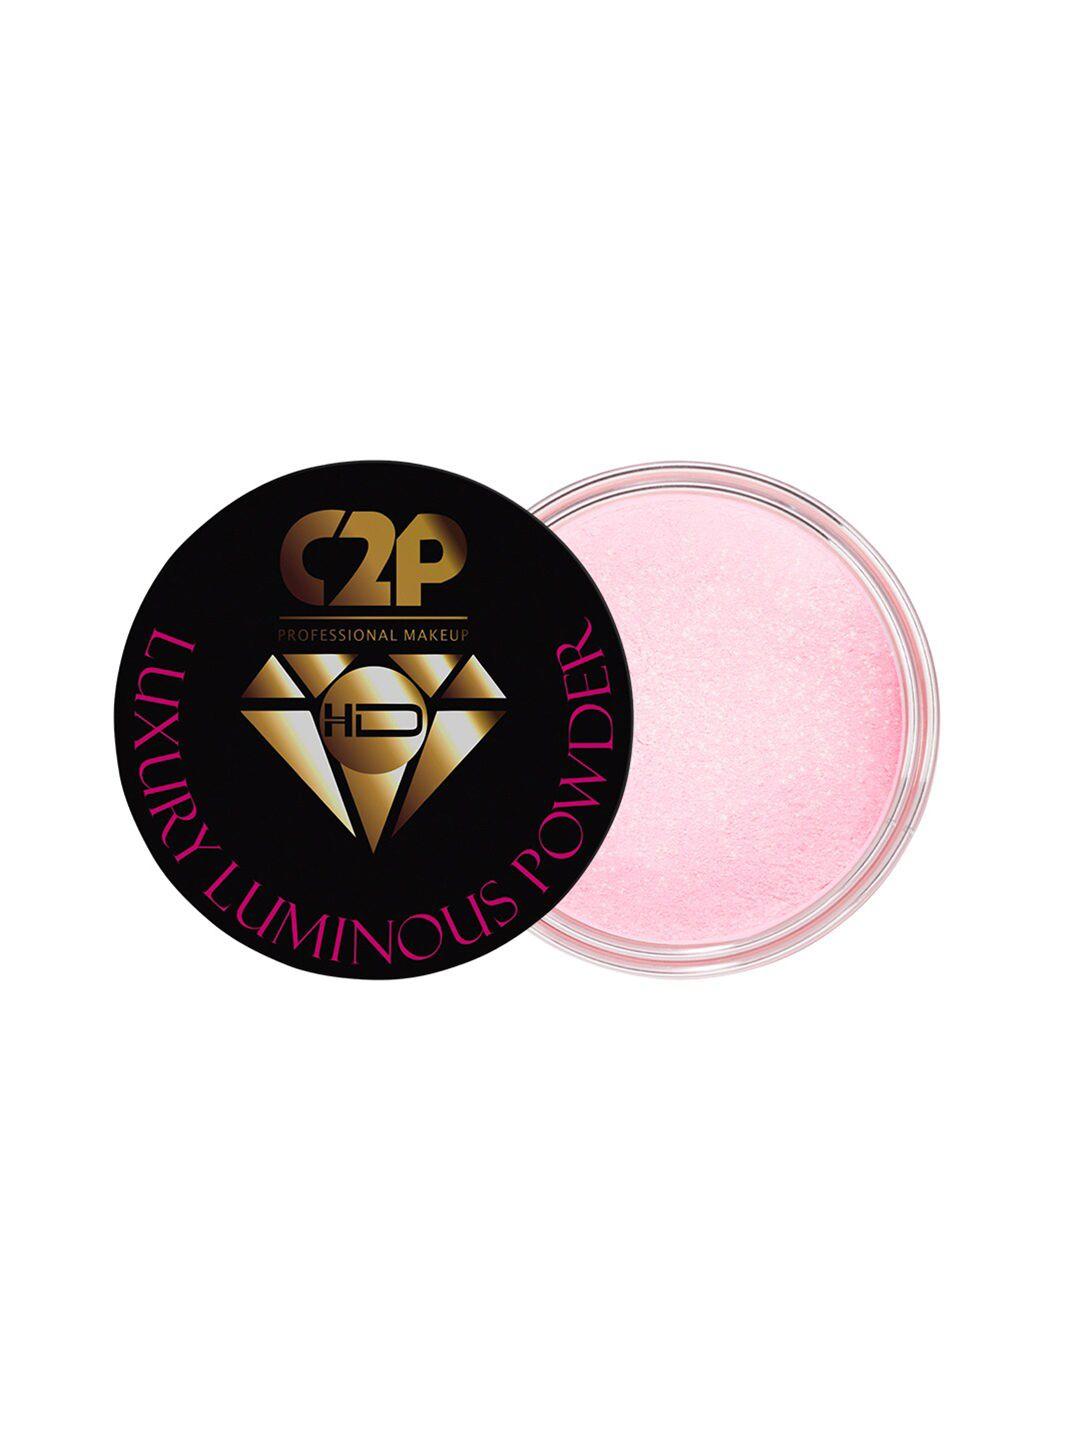 c2p professional makeup hd luxury luminous shimmer powder - chantilly 05